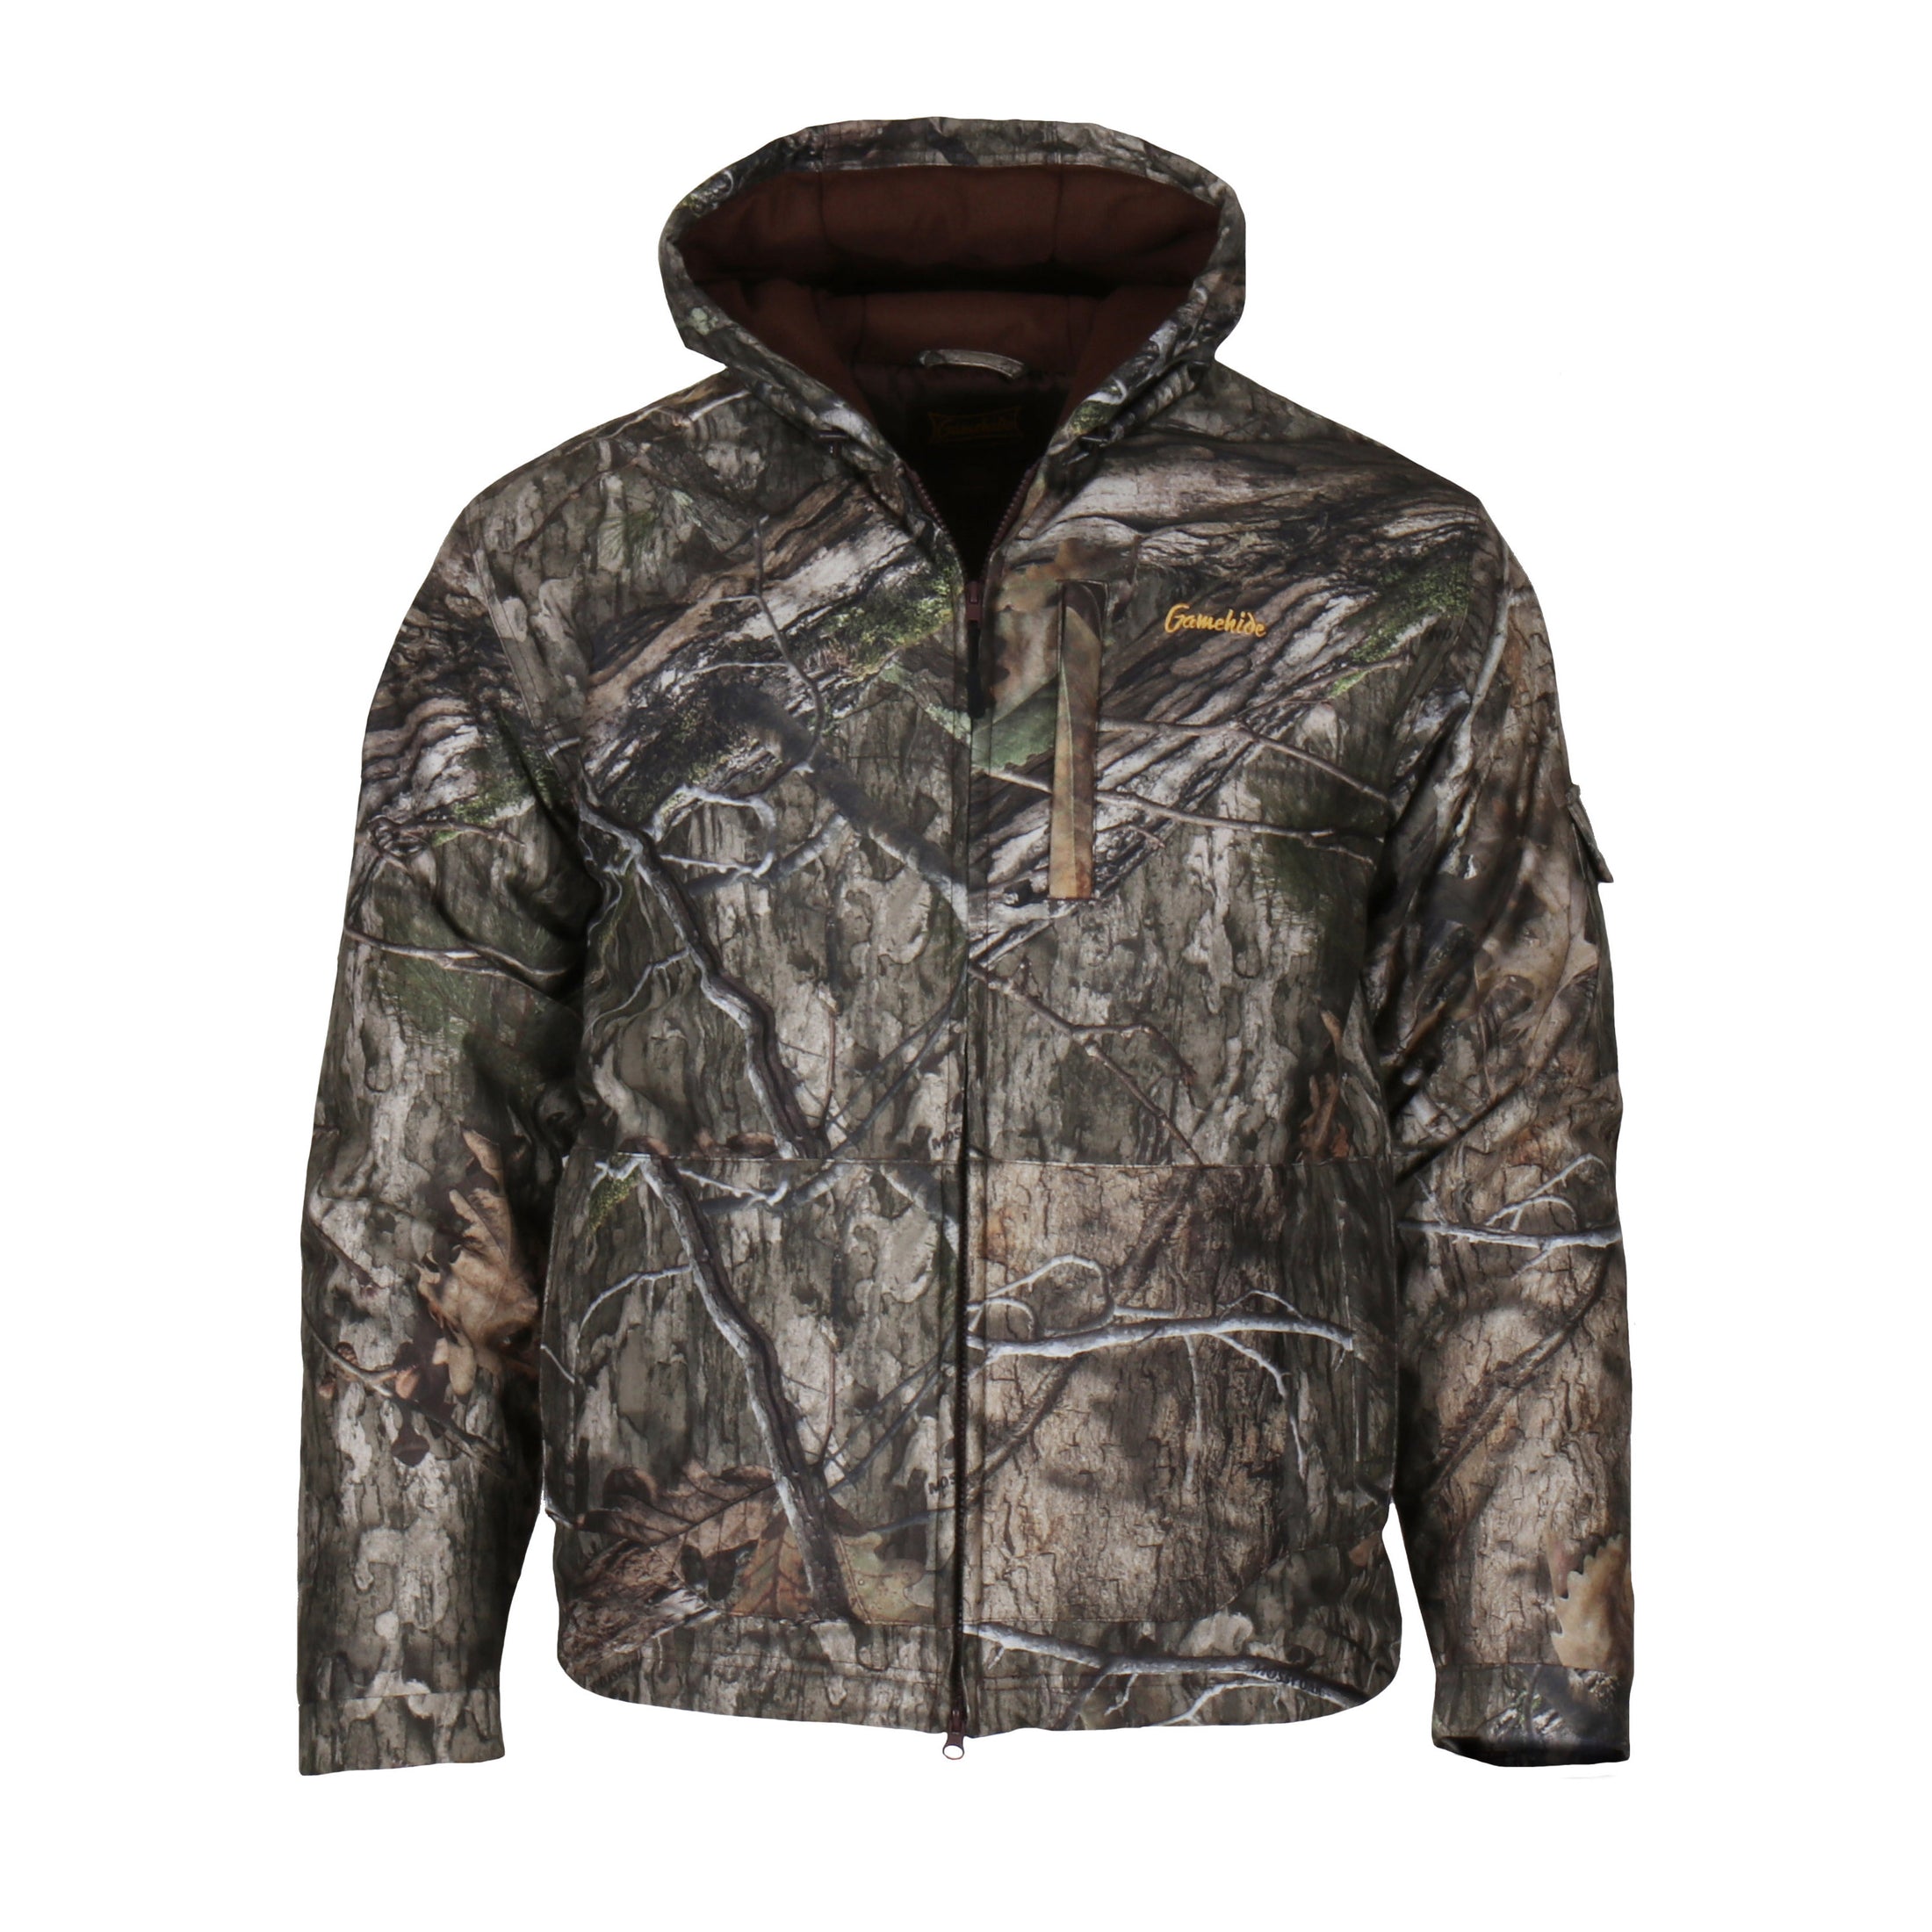 gamehide tundra jacket (mossy oak dna)